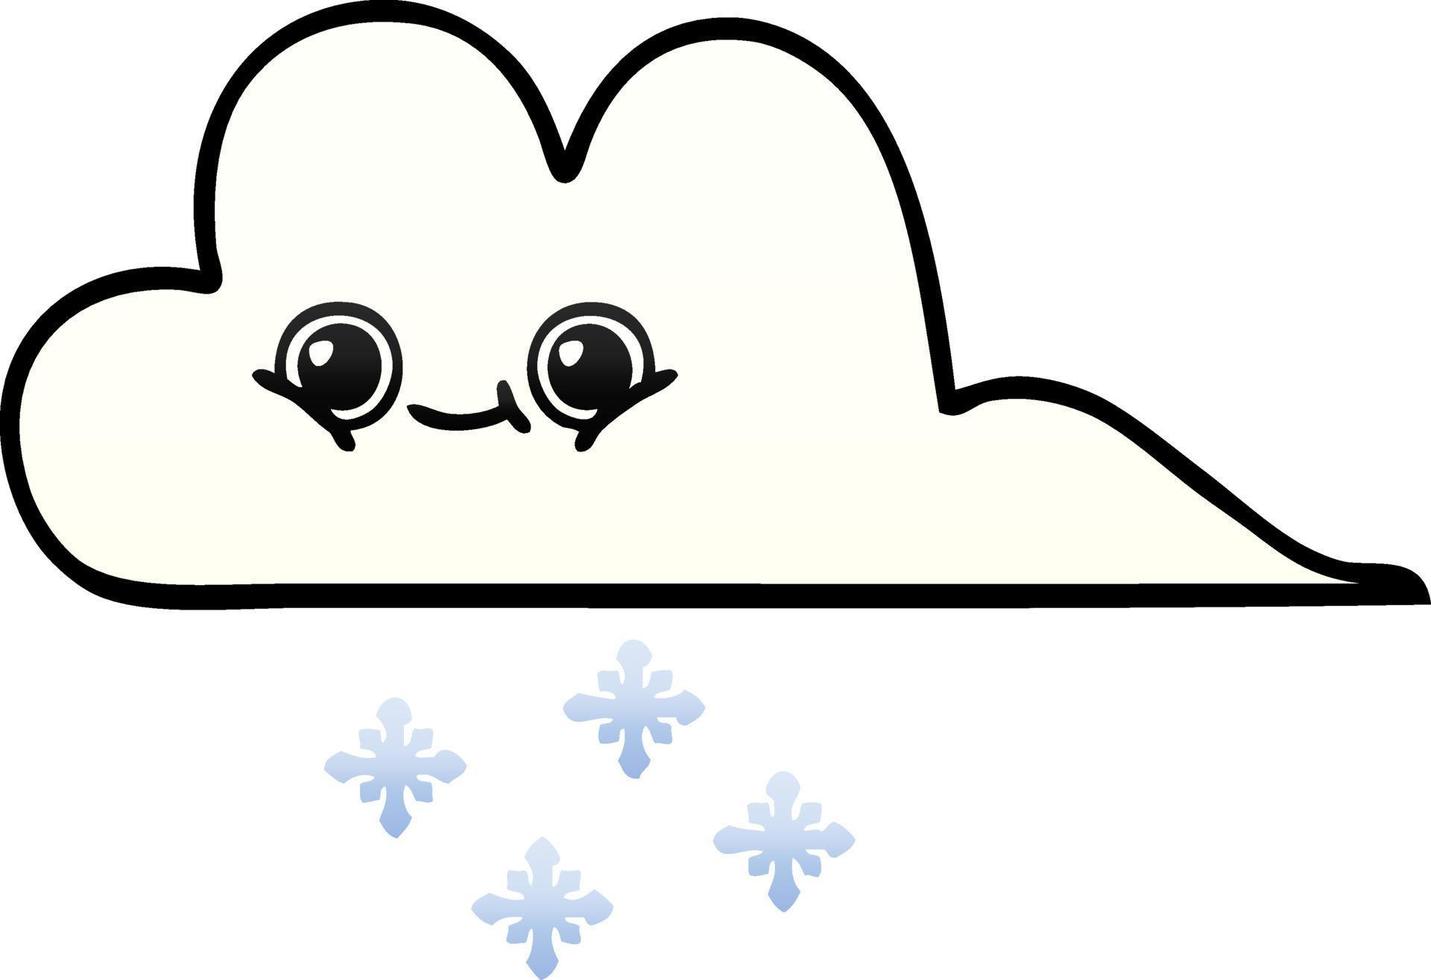 nuage de neige dessin animé ombré dégradé vecteur